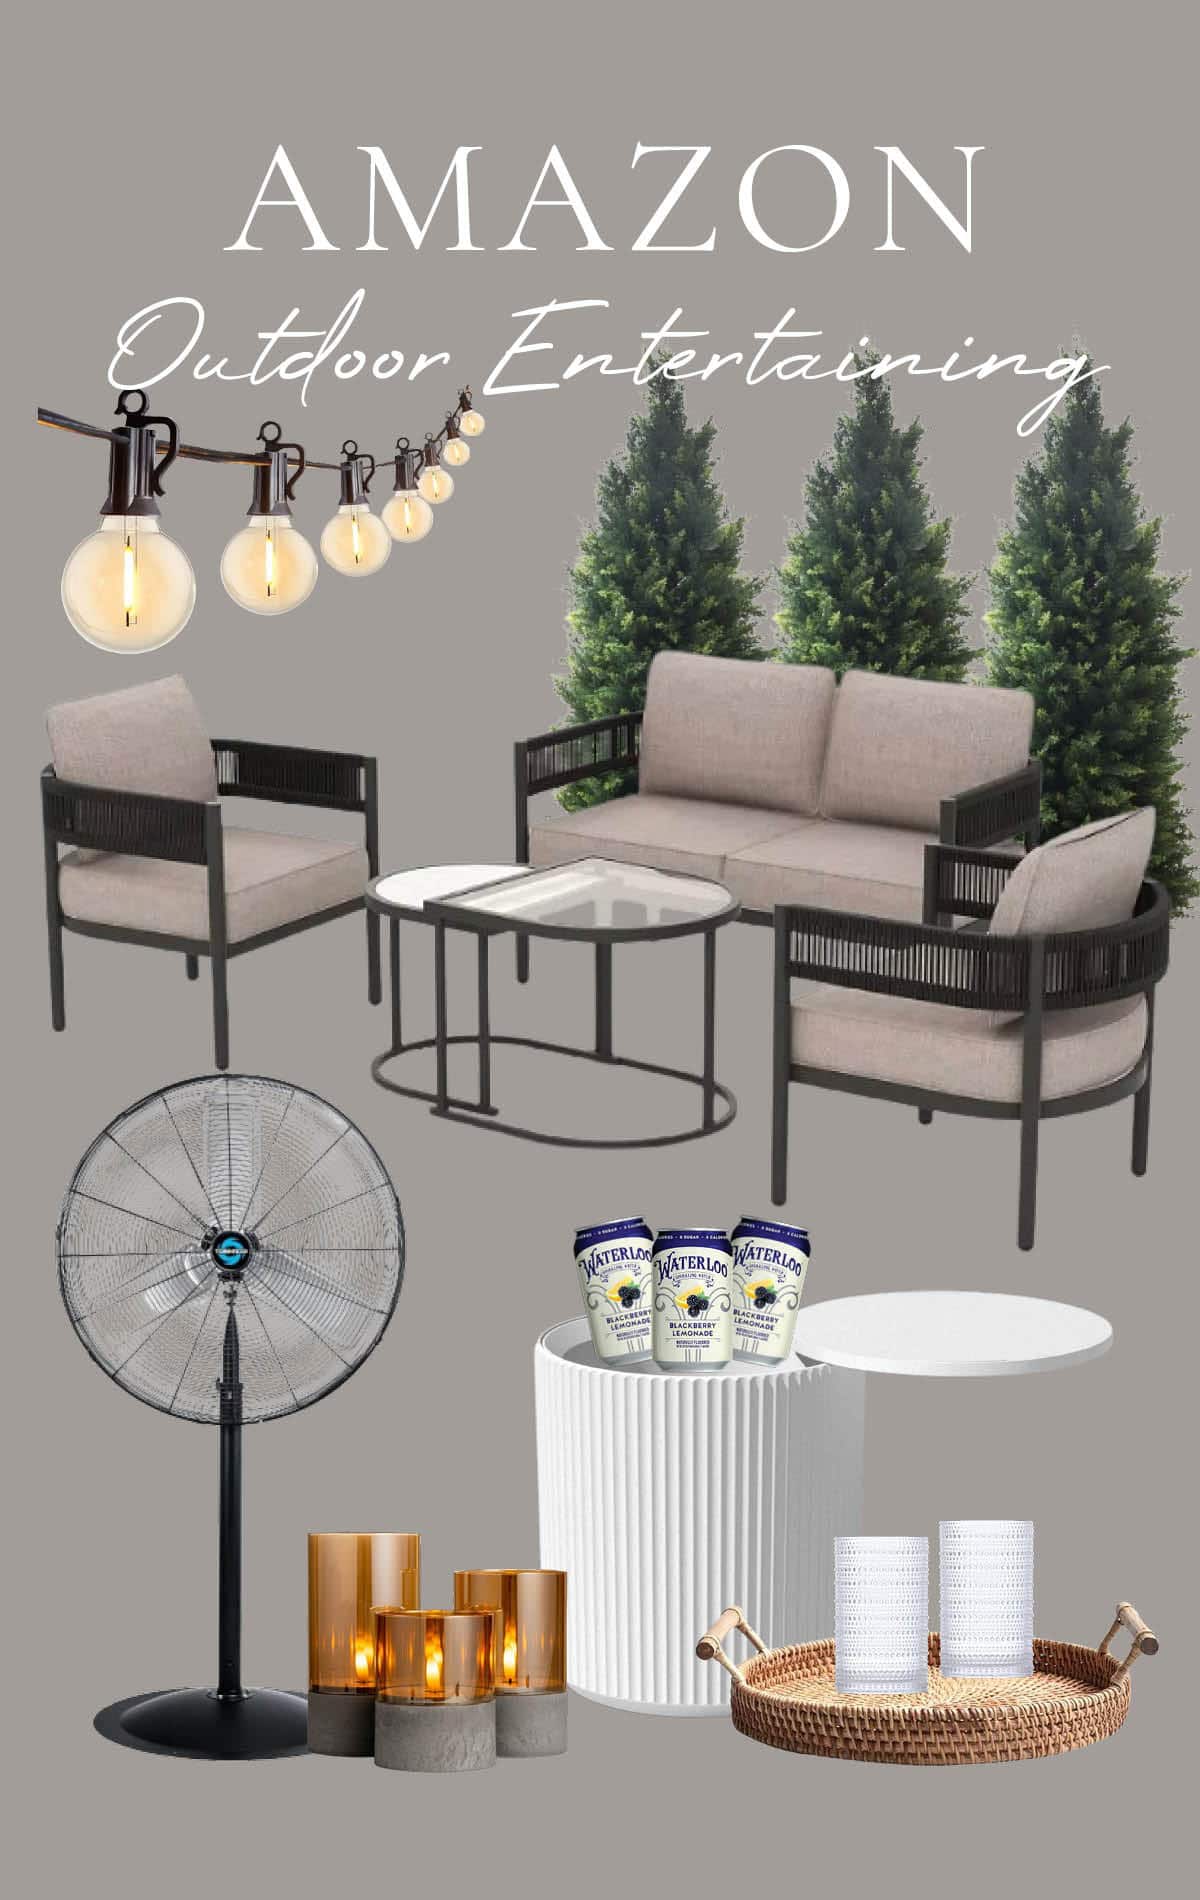 Amazon outdoor furniture modern patio mood board interior design